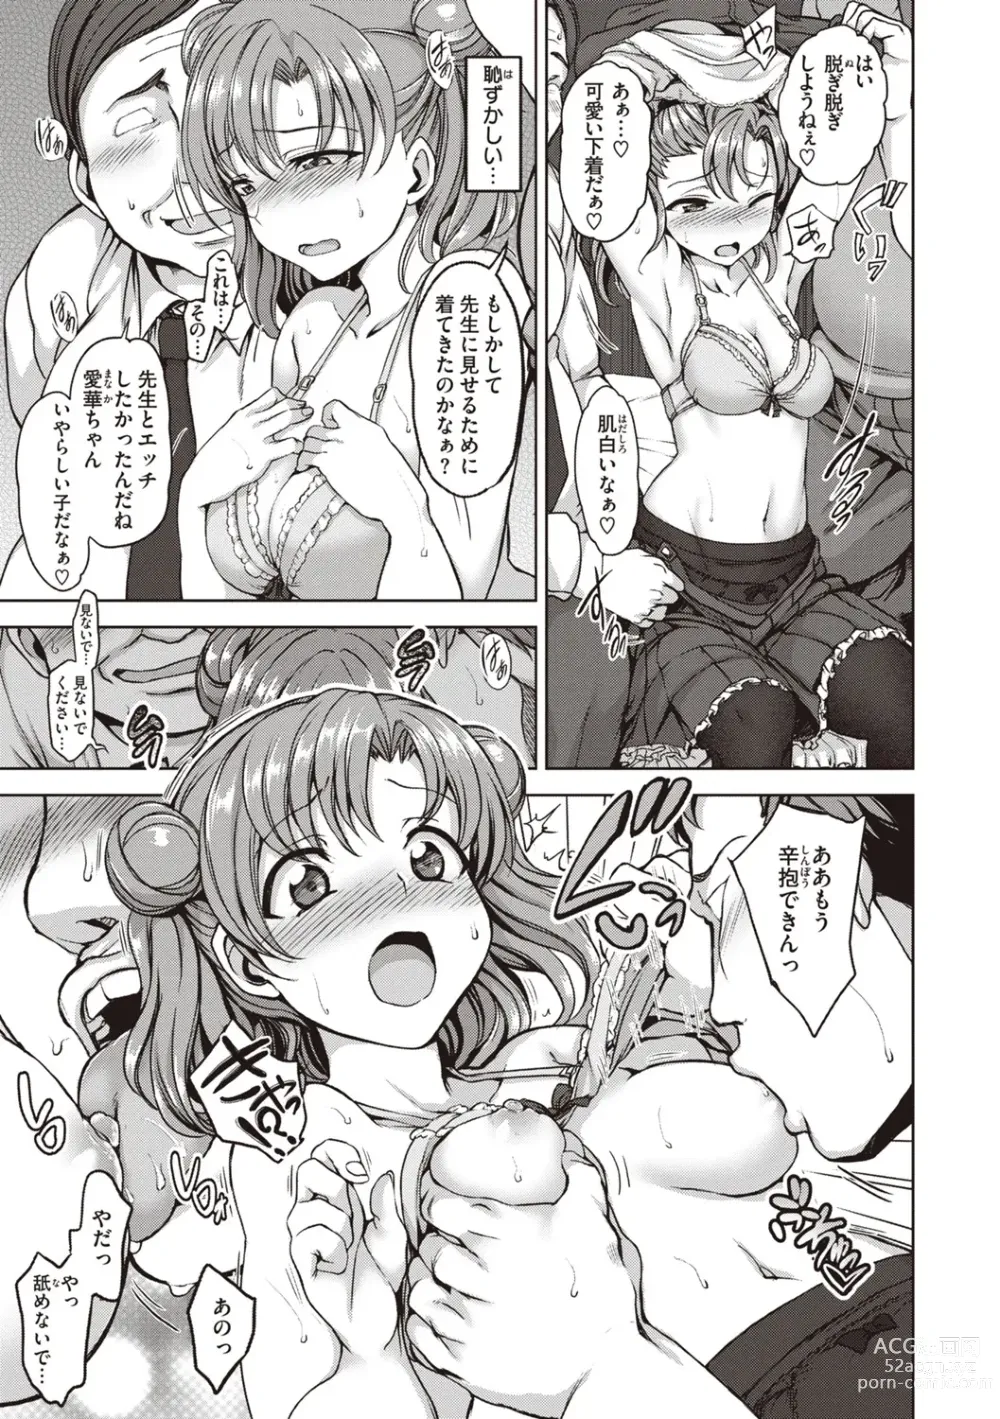 Page 25 of manga Yumemiru Otome - Les vierges dans le rêve Complete Edition